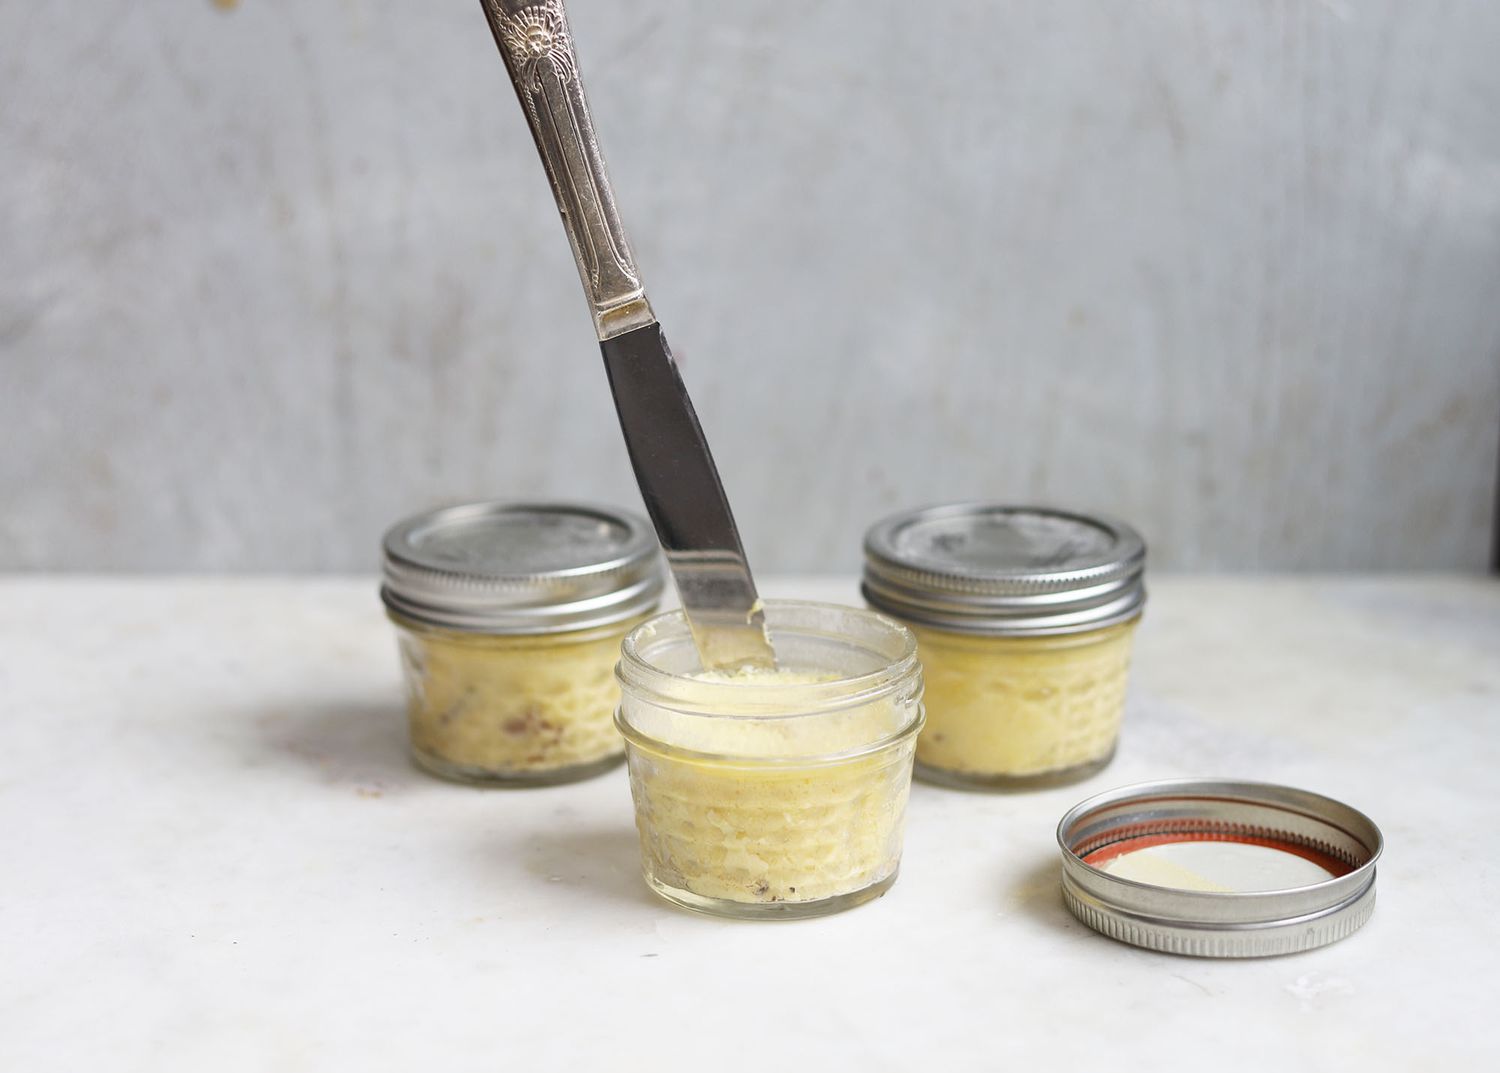 using knife around the edge of sous vide egg bites in jars